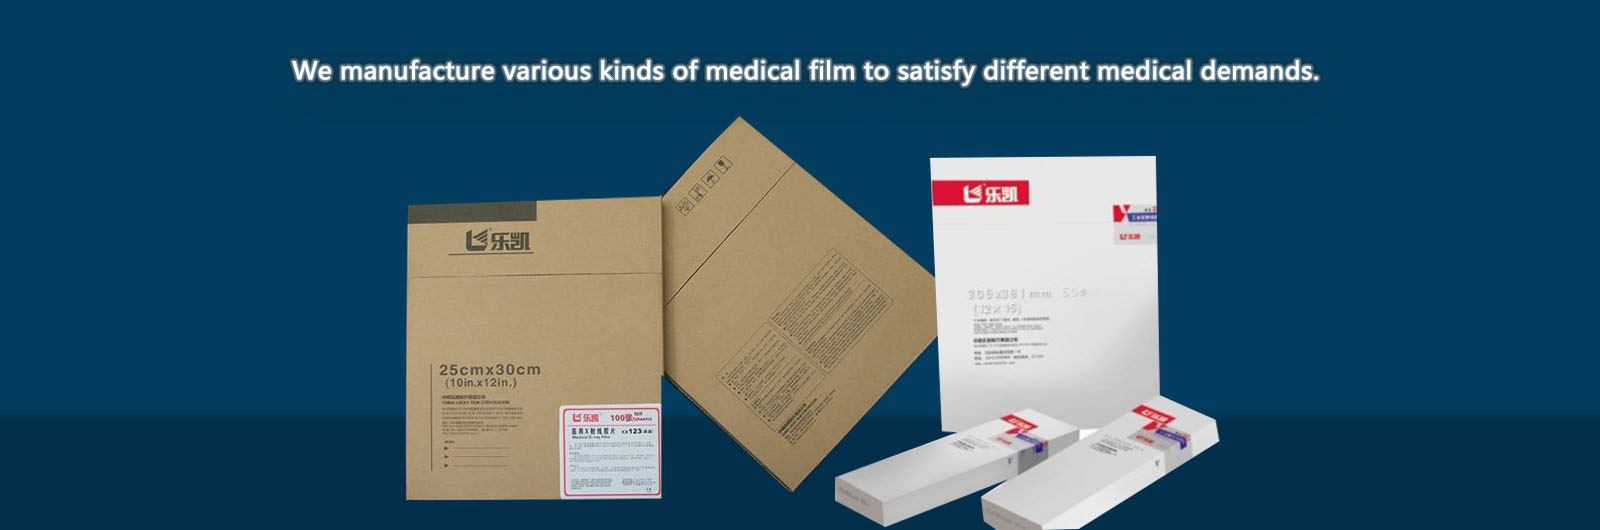 Medical Dry Film KX410 - website of 